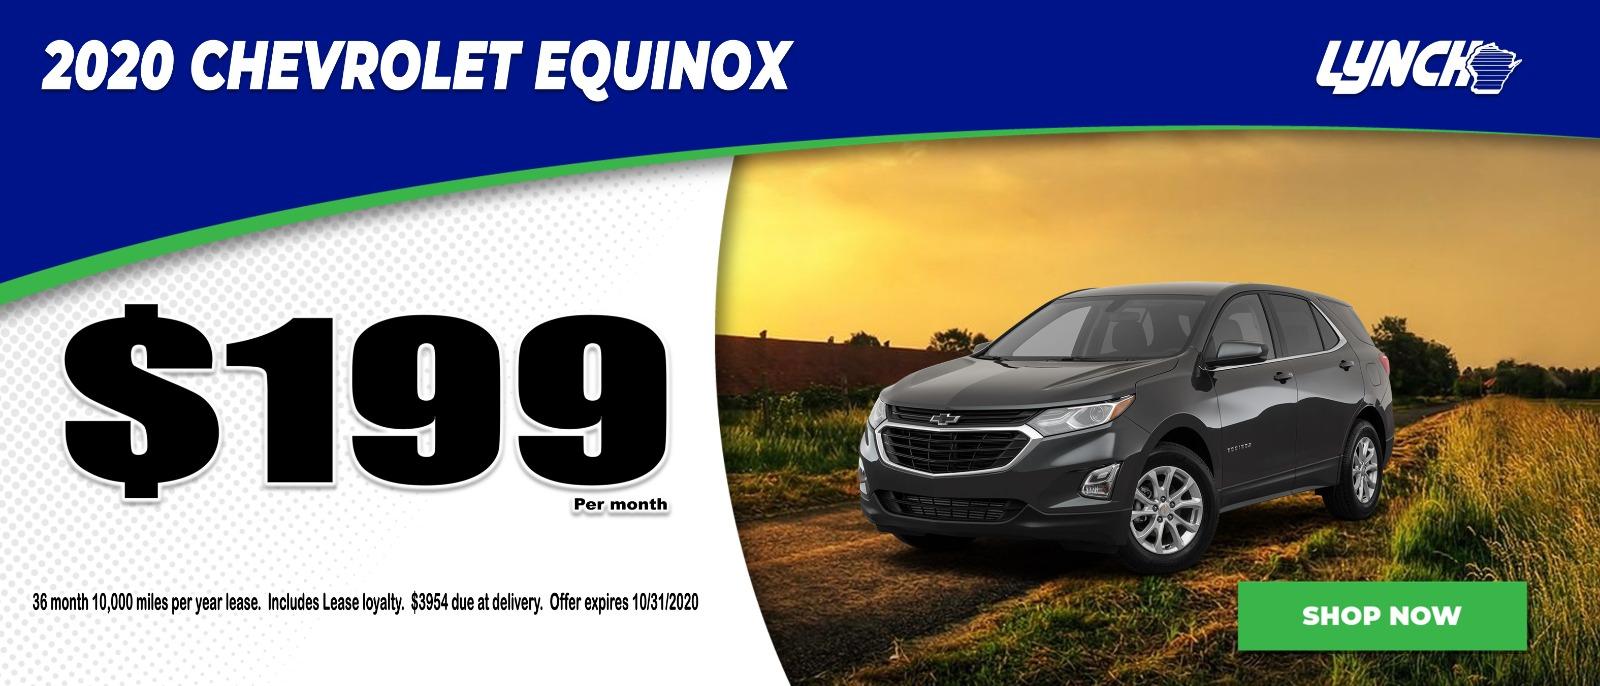 2020 Chevy Equinox $199 per month in Mukwonago Wisconsin